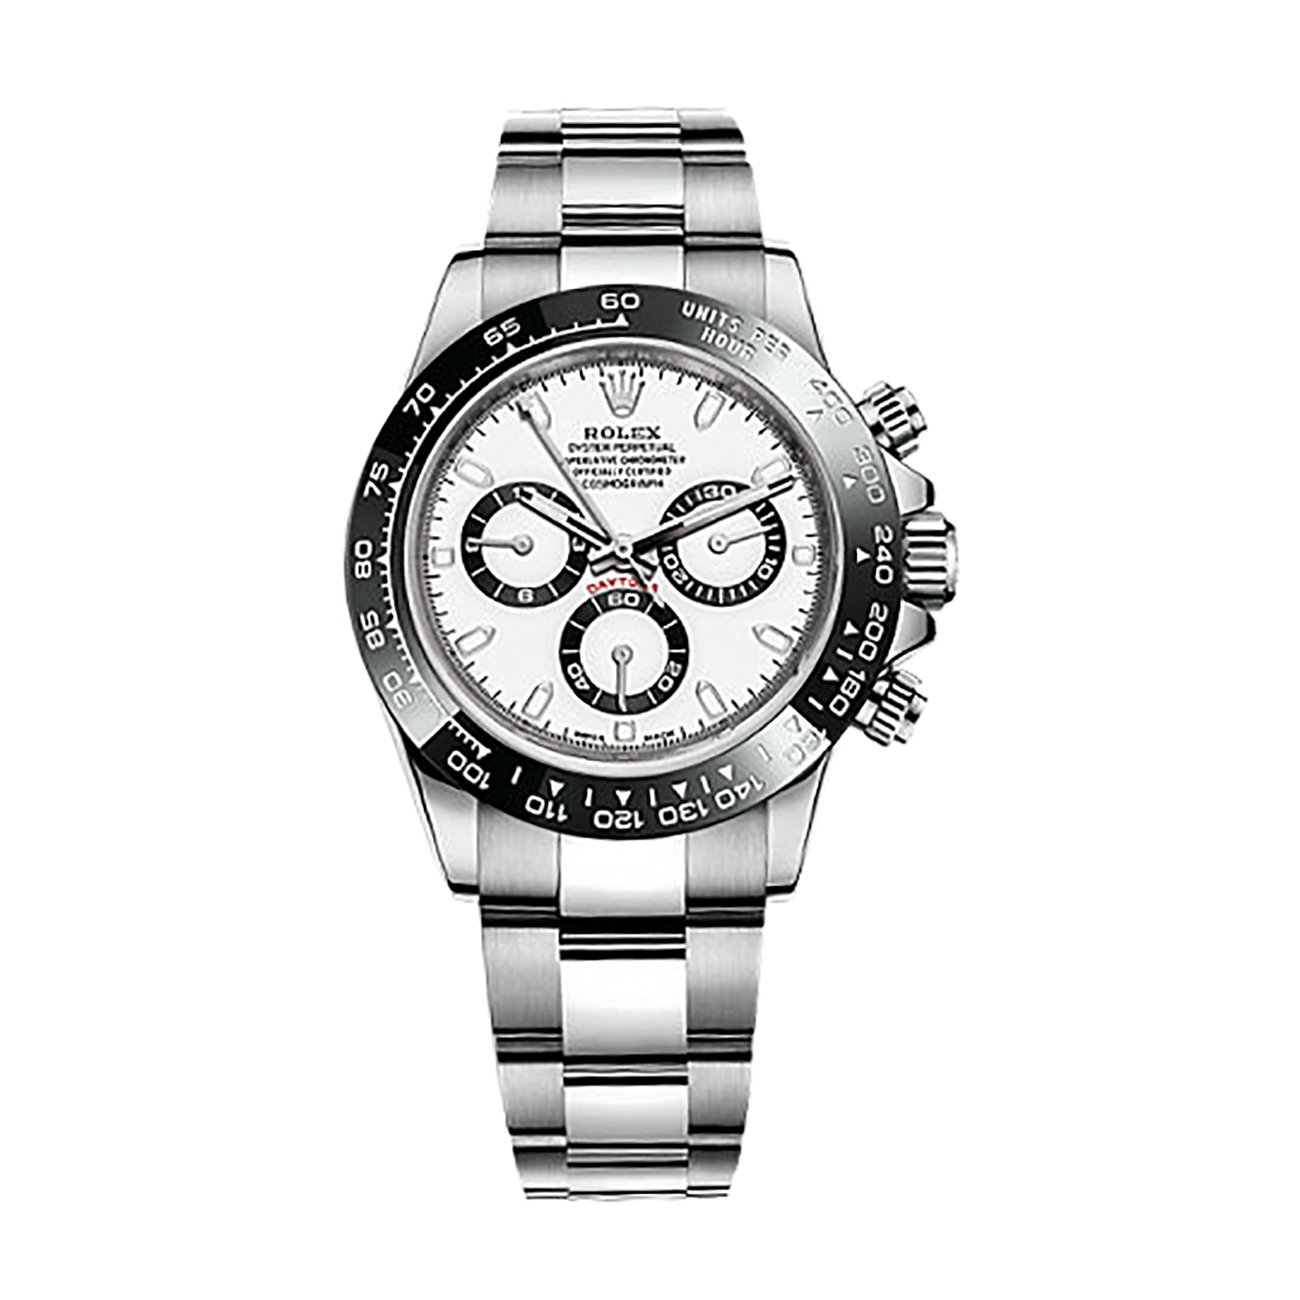 Cosmograph Daytona 116500LN Stainless Steel Watch (White)